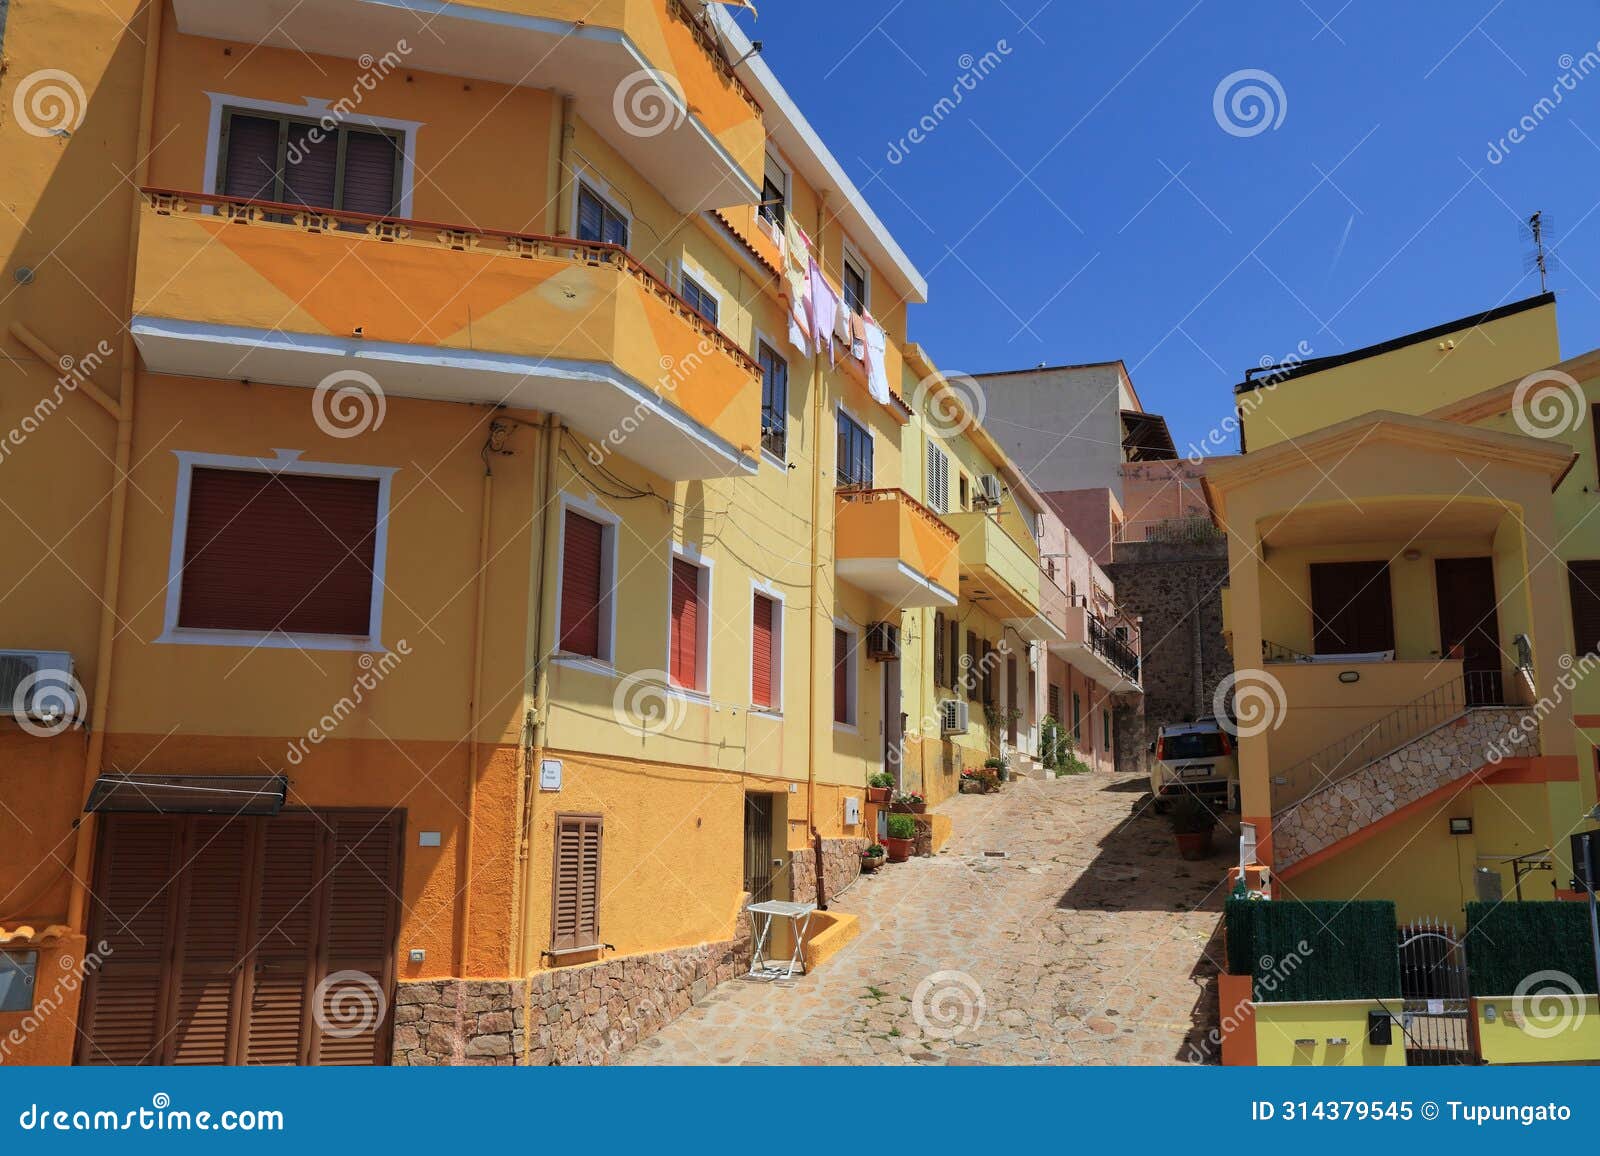 castelsardo italian town in sardinia